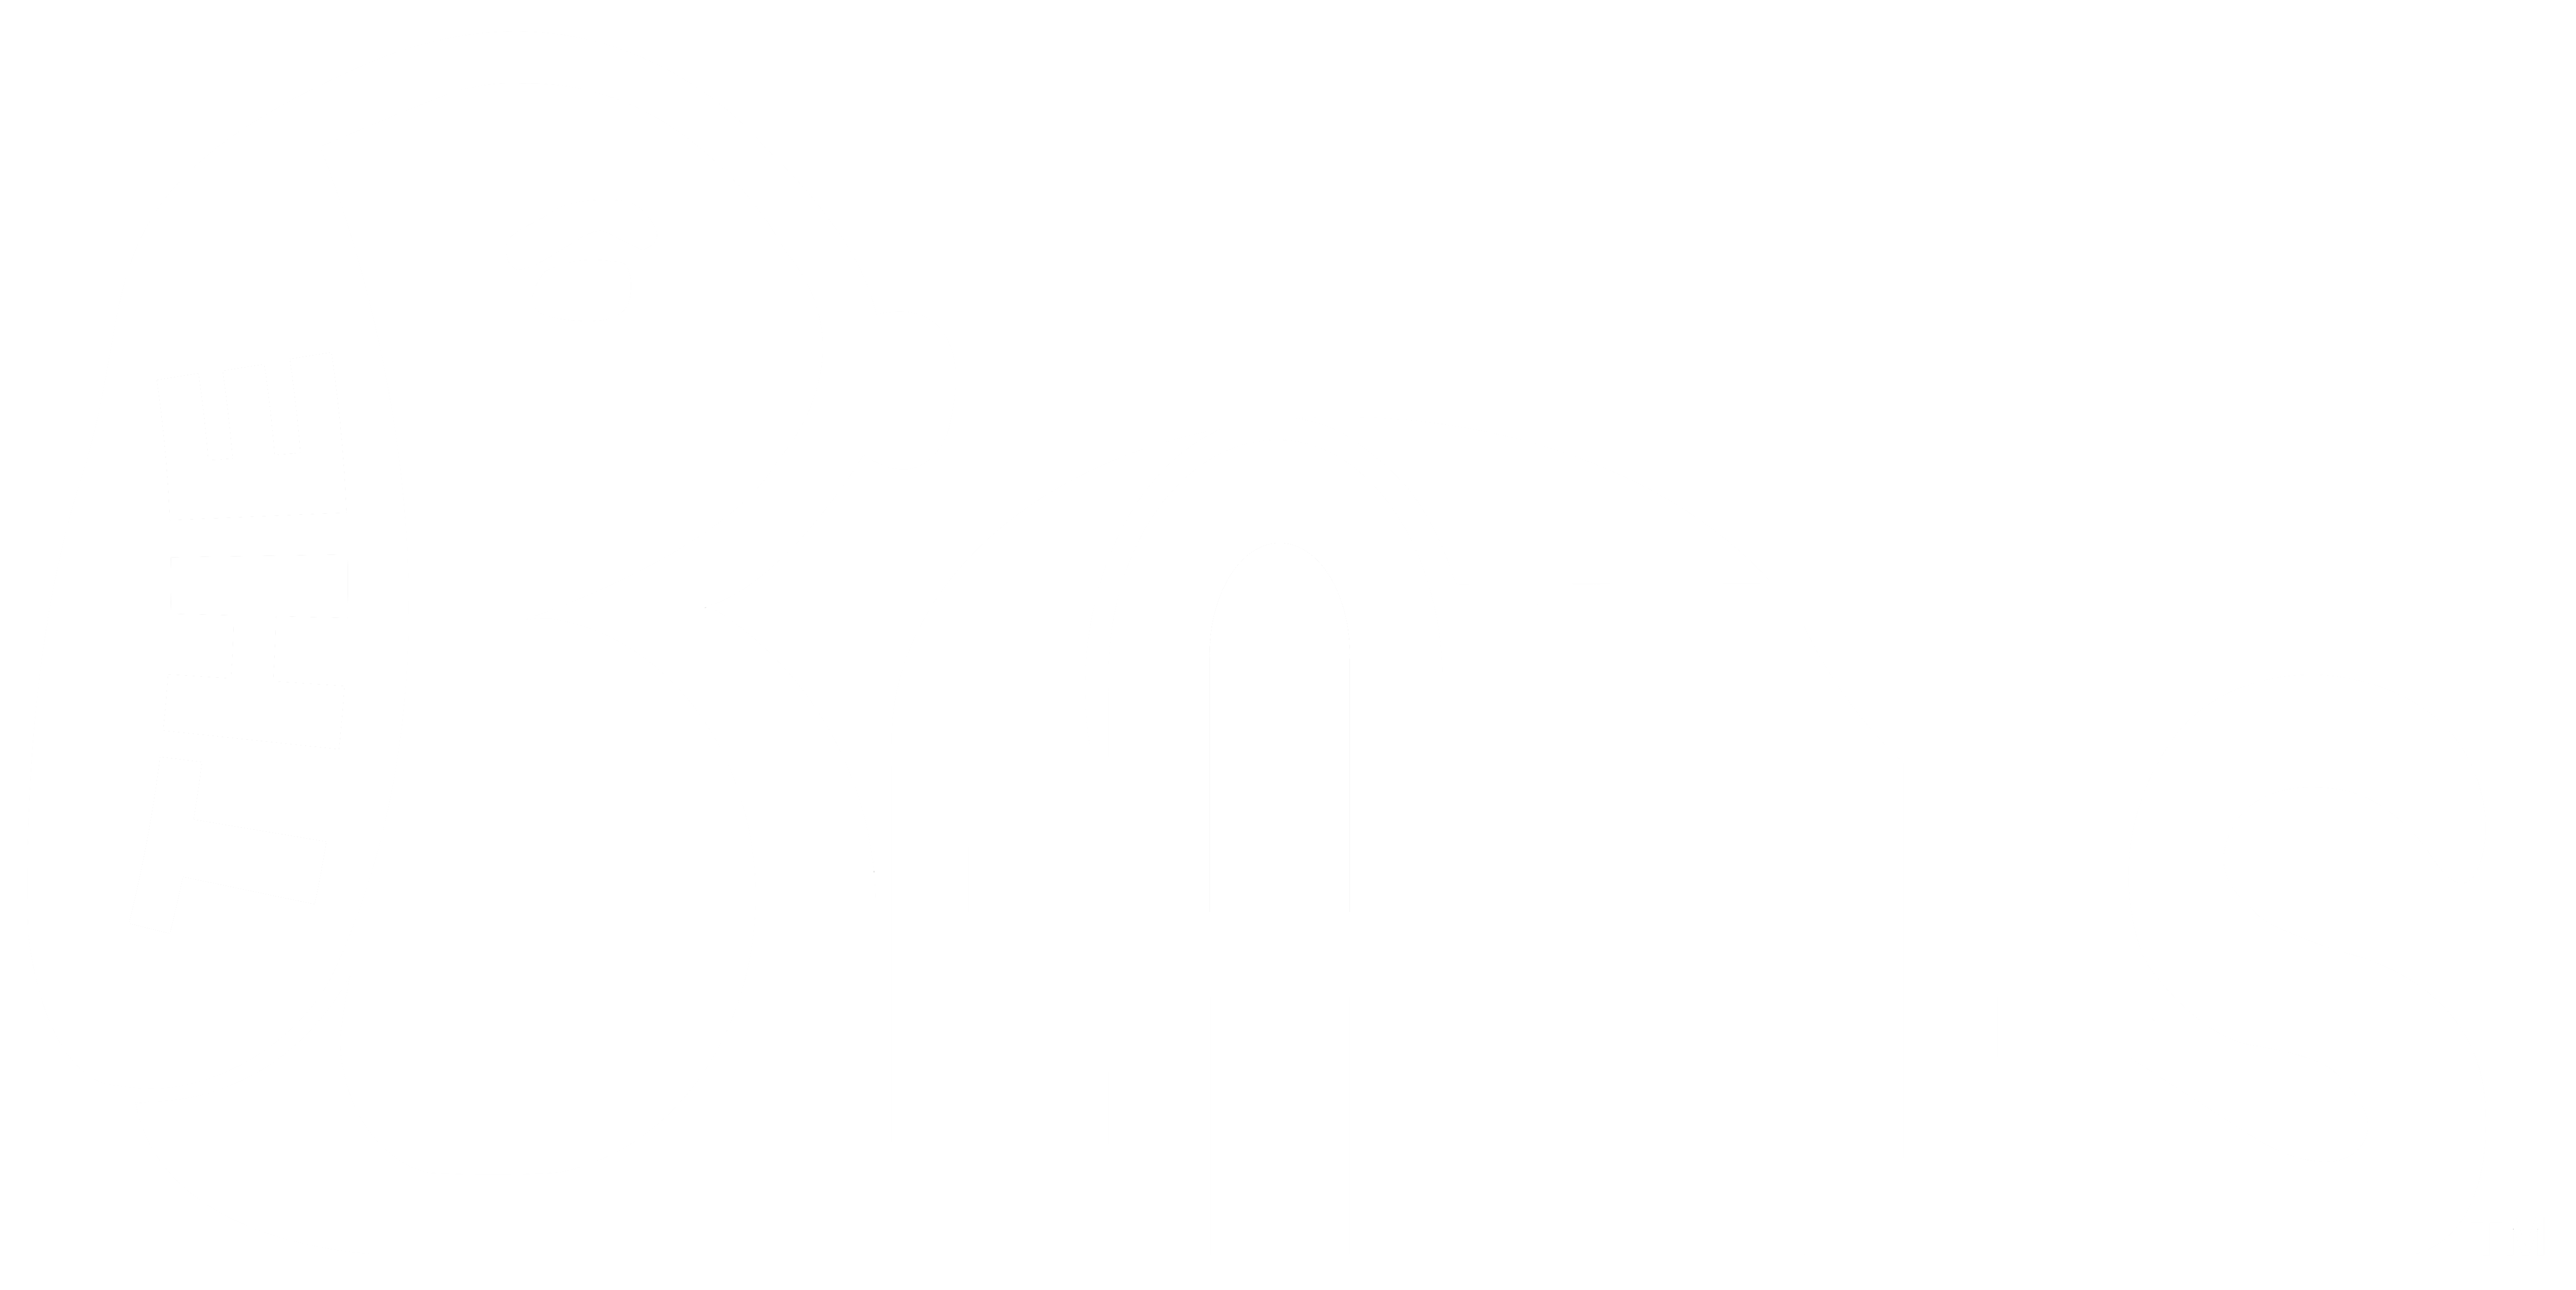 The Beagles